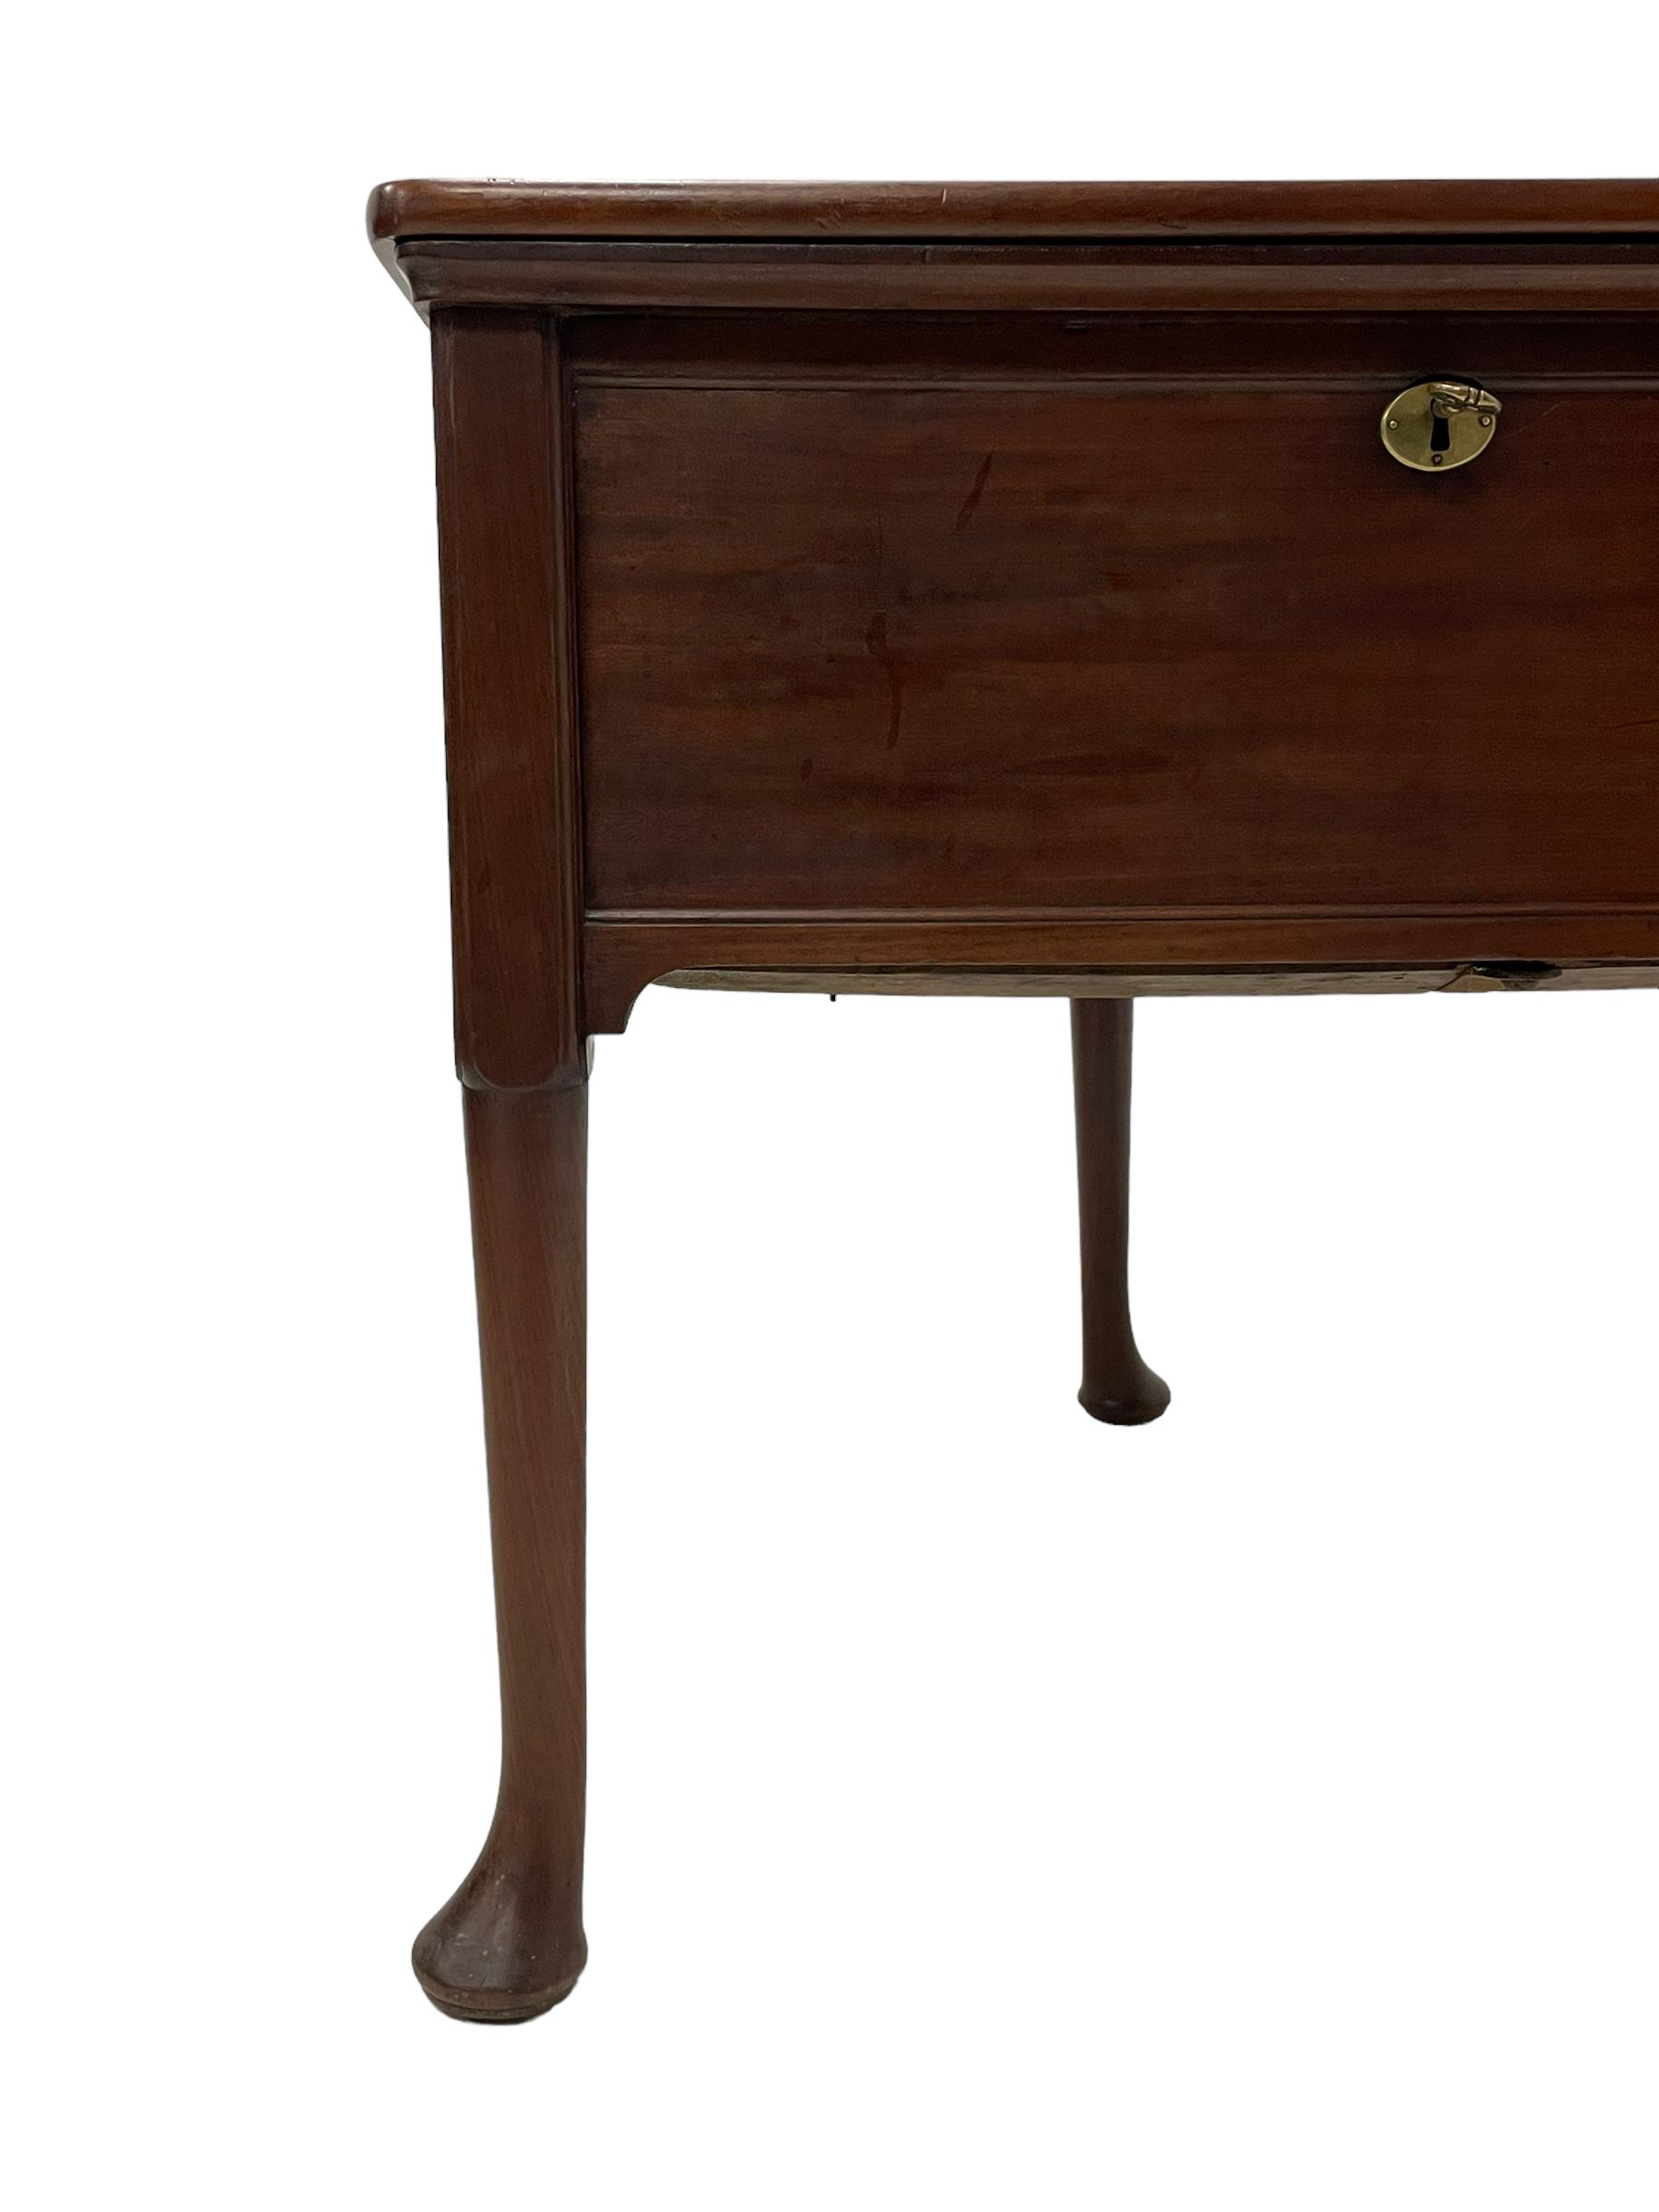 18th century mahogany metamorphic campaign writing desk - Image 17 of 27